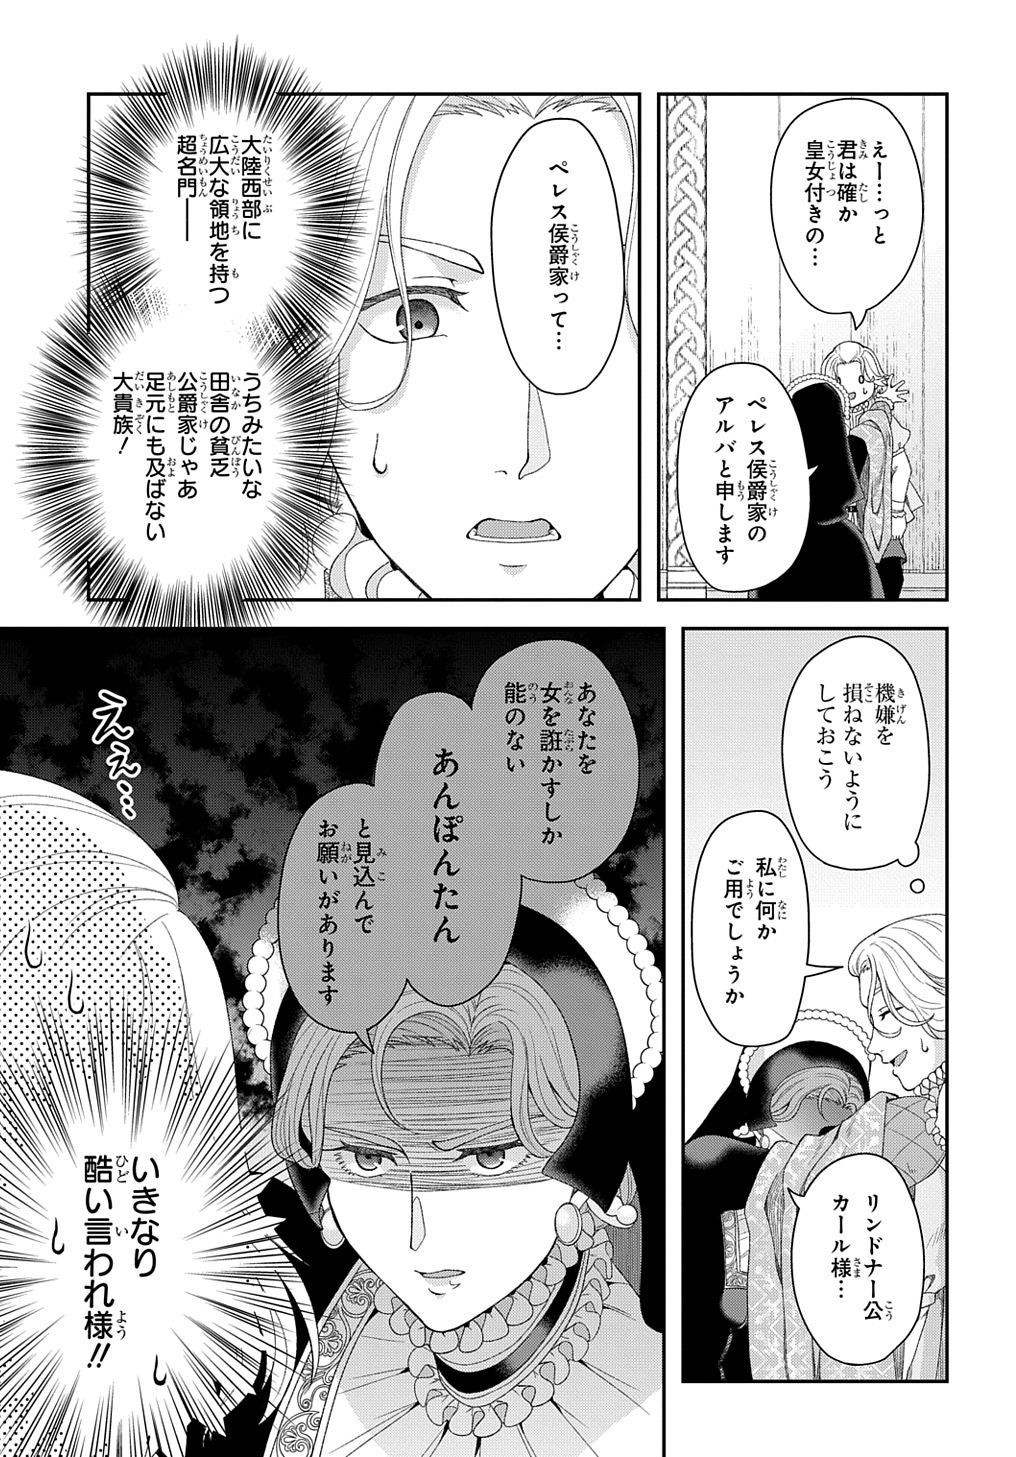 Shinigami Oujo no Kekkon - Chapter 5.1 - Page 3